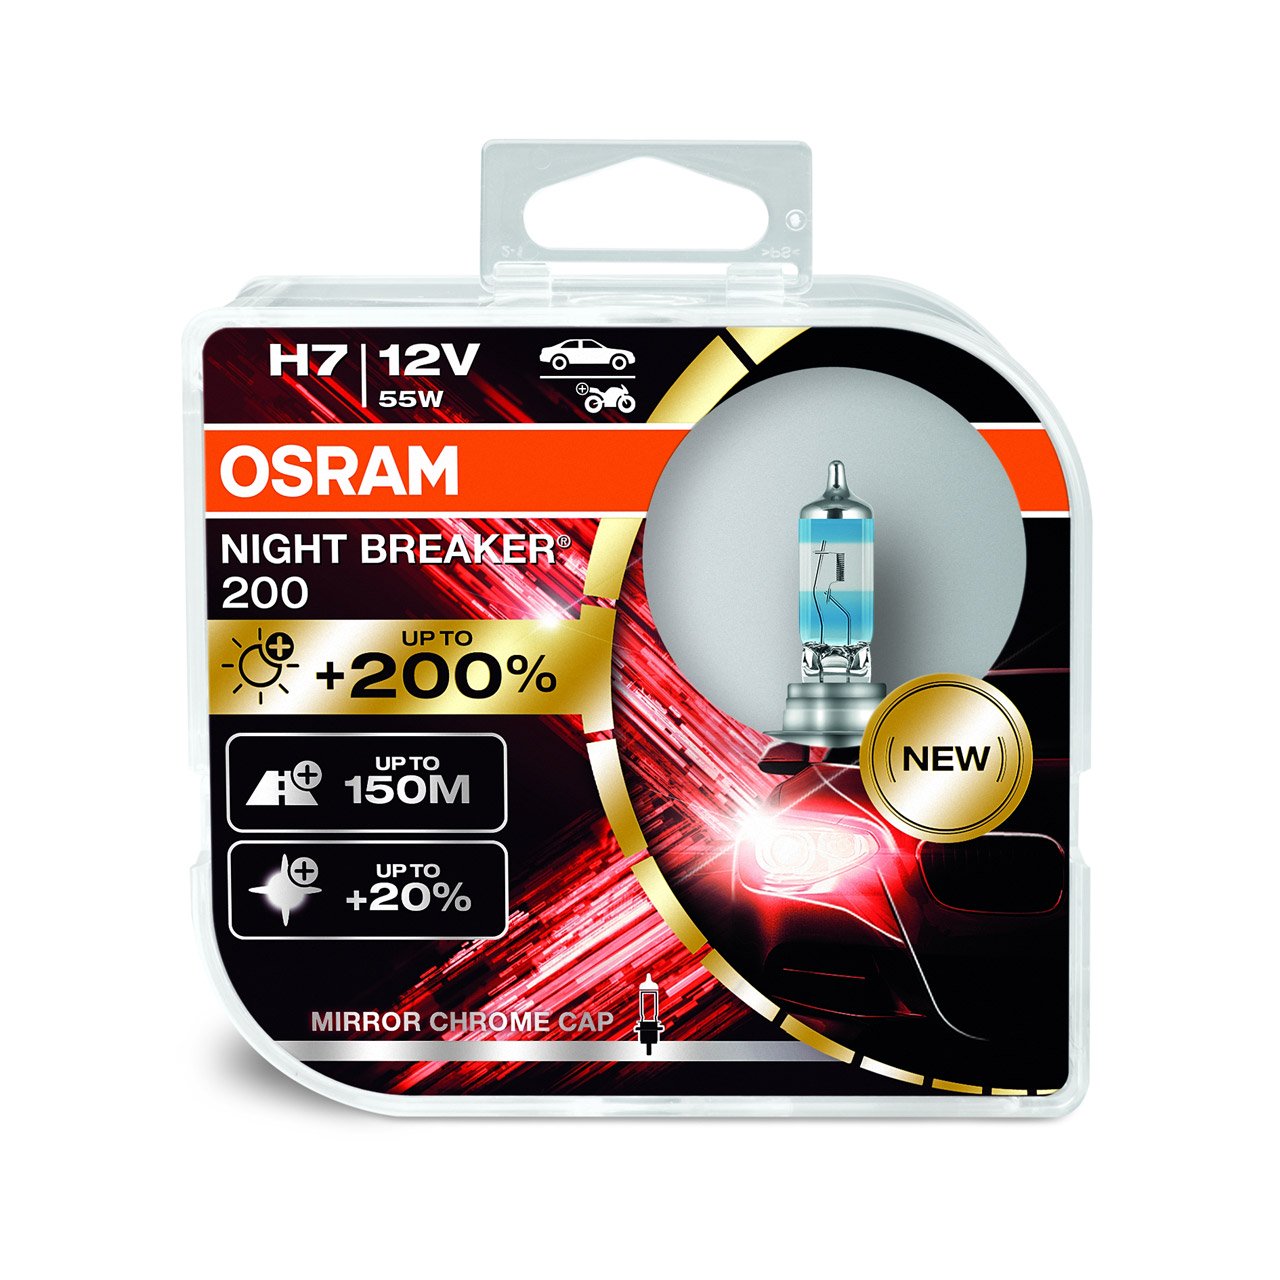 2x OSRAM H7 NIGHT BREAKER 200 Glühlampe Halogenlampe 12V 55W PX26d + 200%